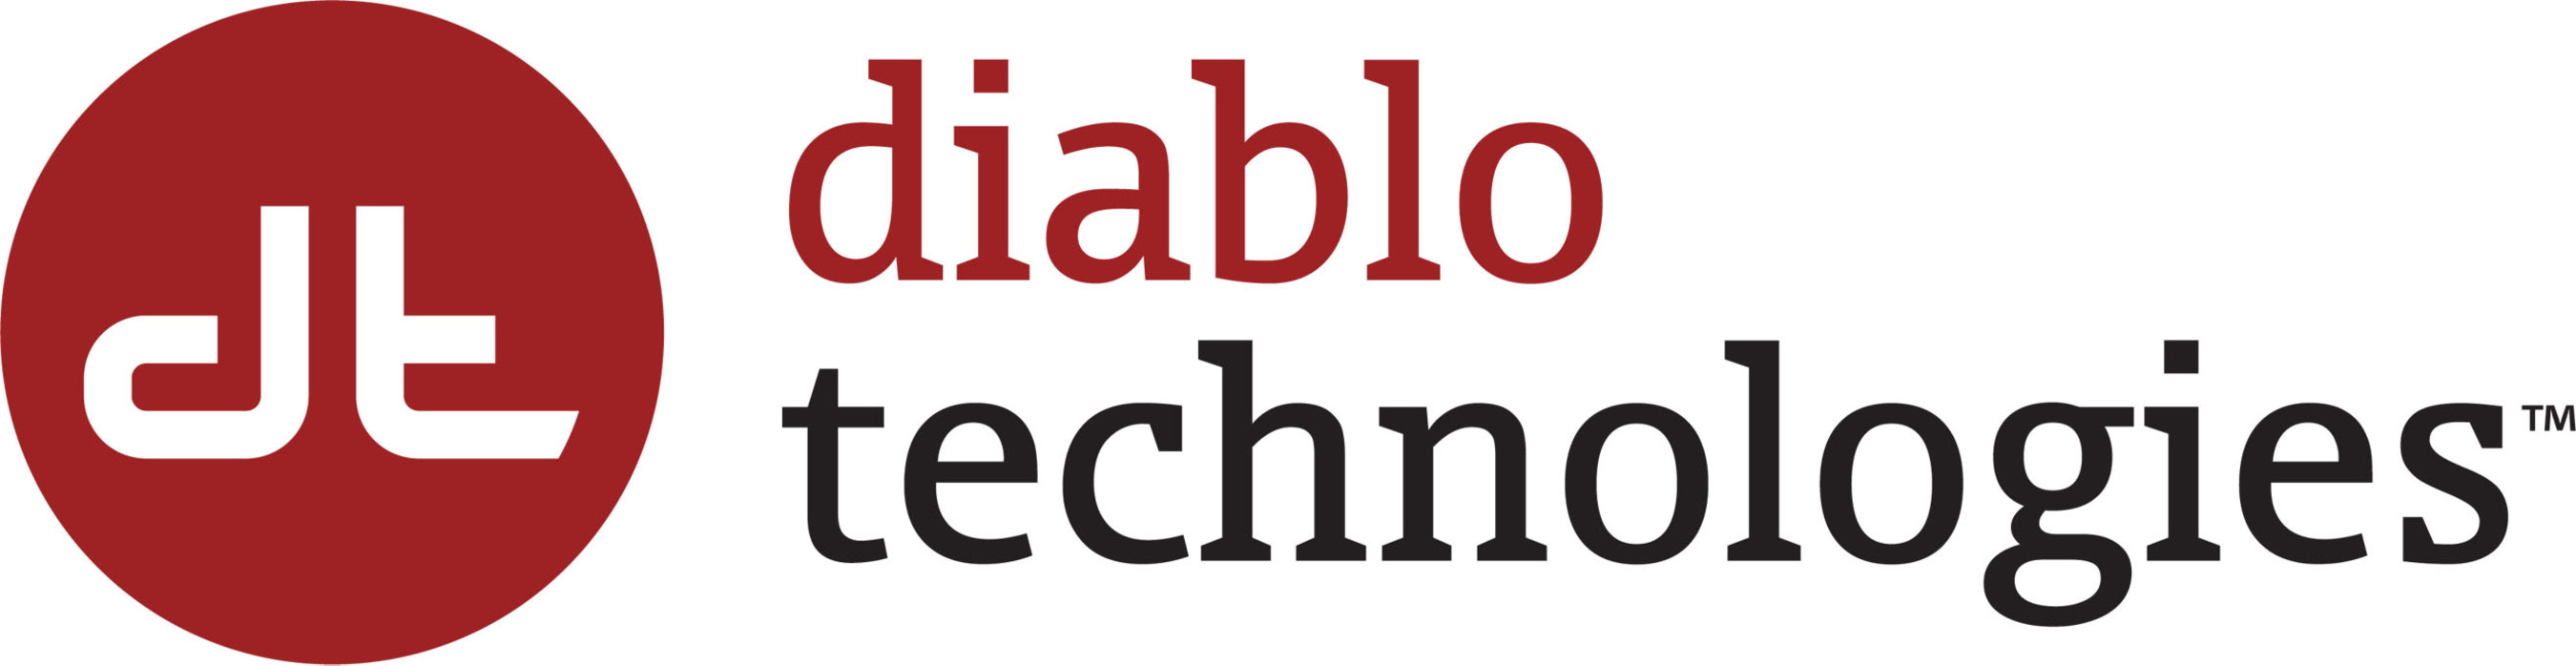 Diablo Technologies logo